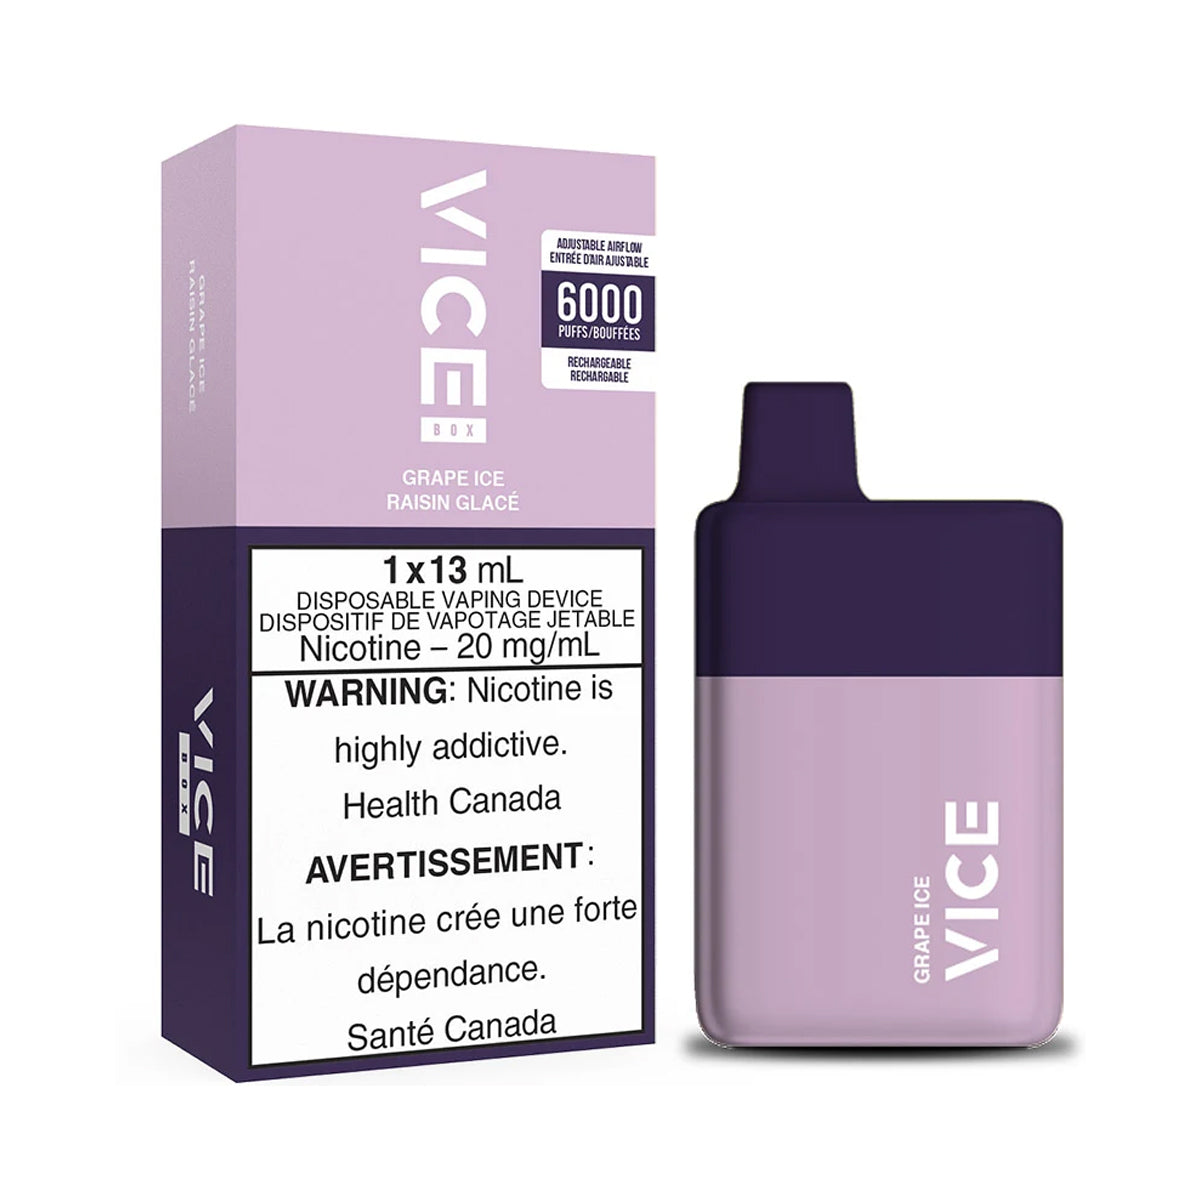 Vice Box - Grape Ice (13mL) (6749768482871)